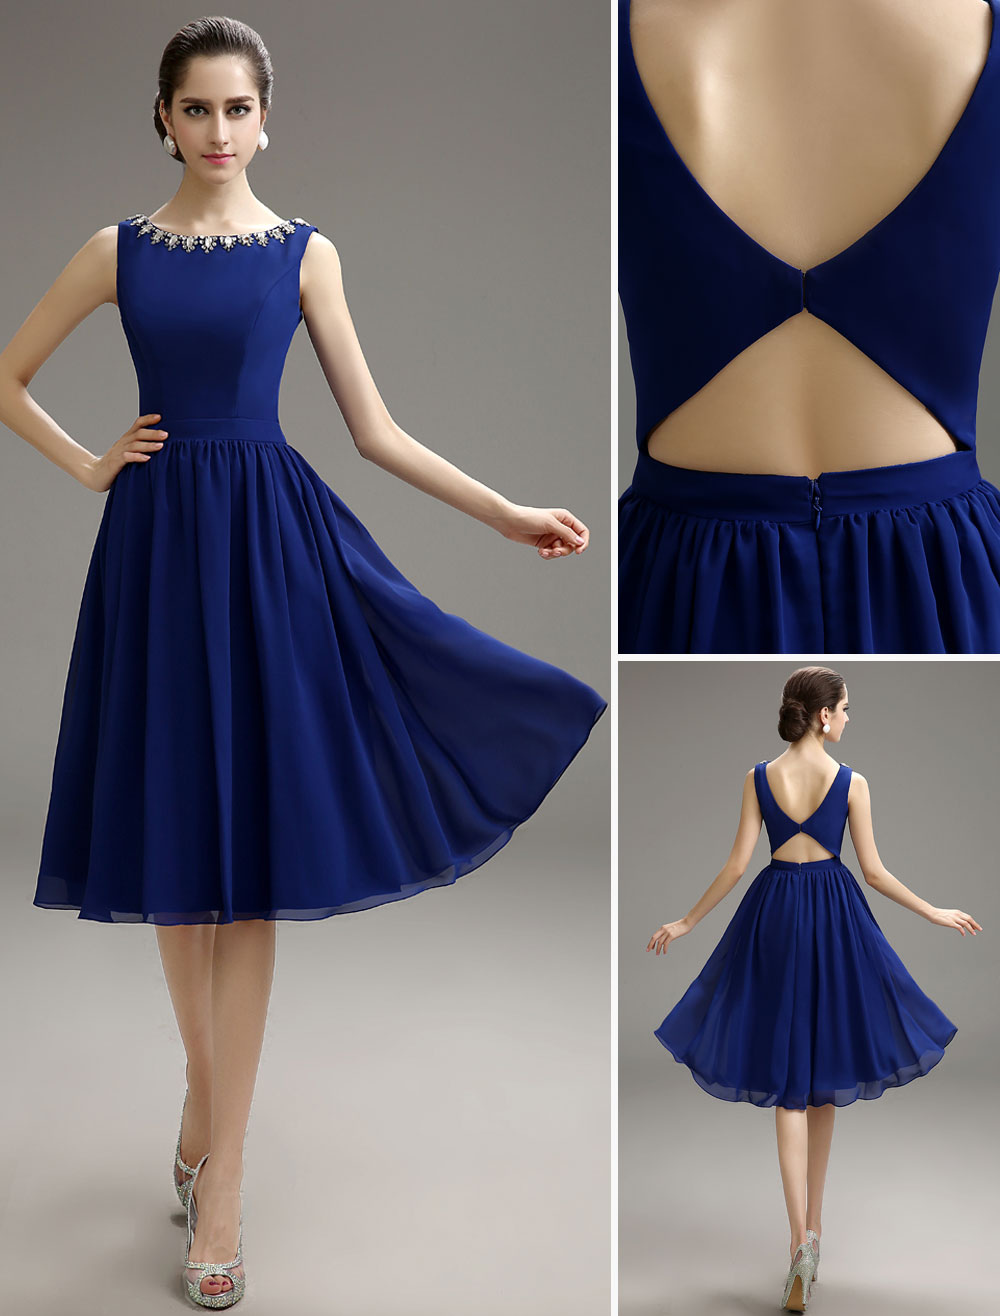 Blue Prom Dress 2021 Short Chiffon Beaded Cocktail Dress Royal Blue